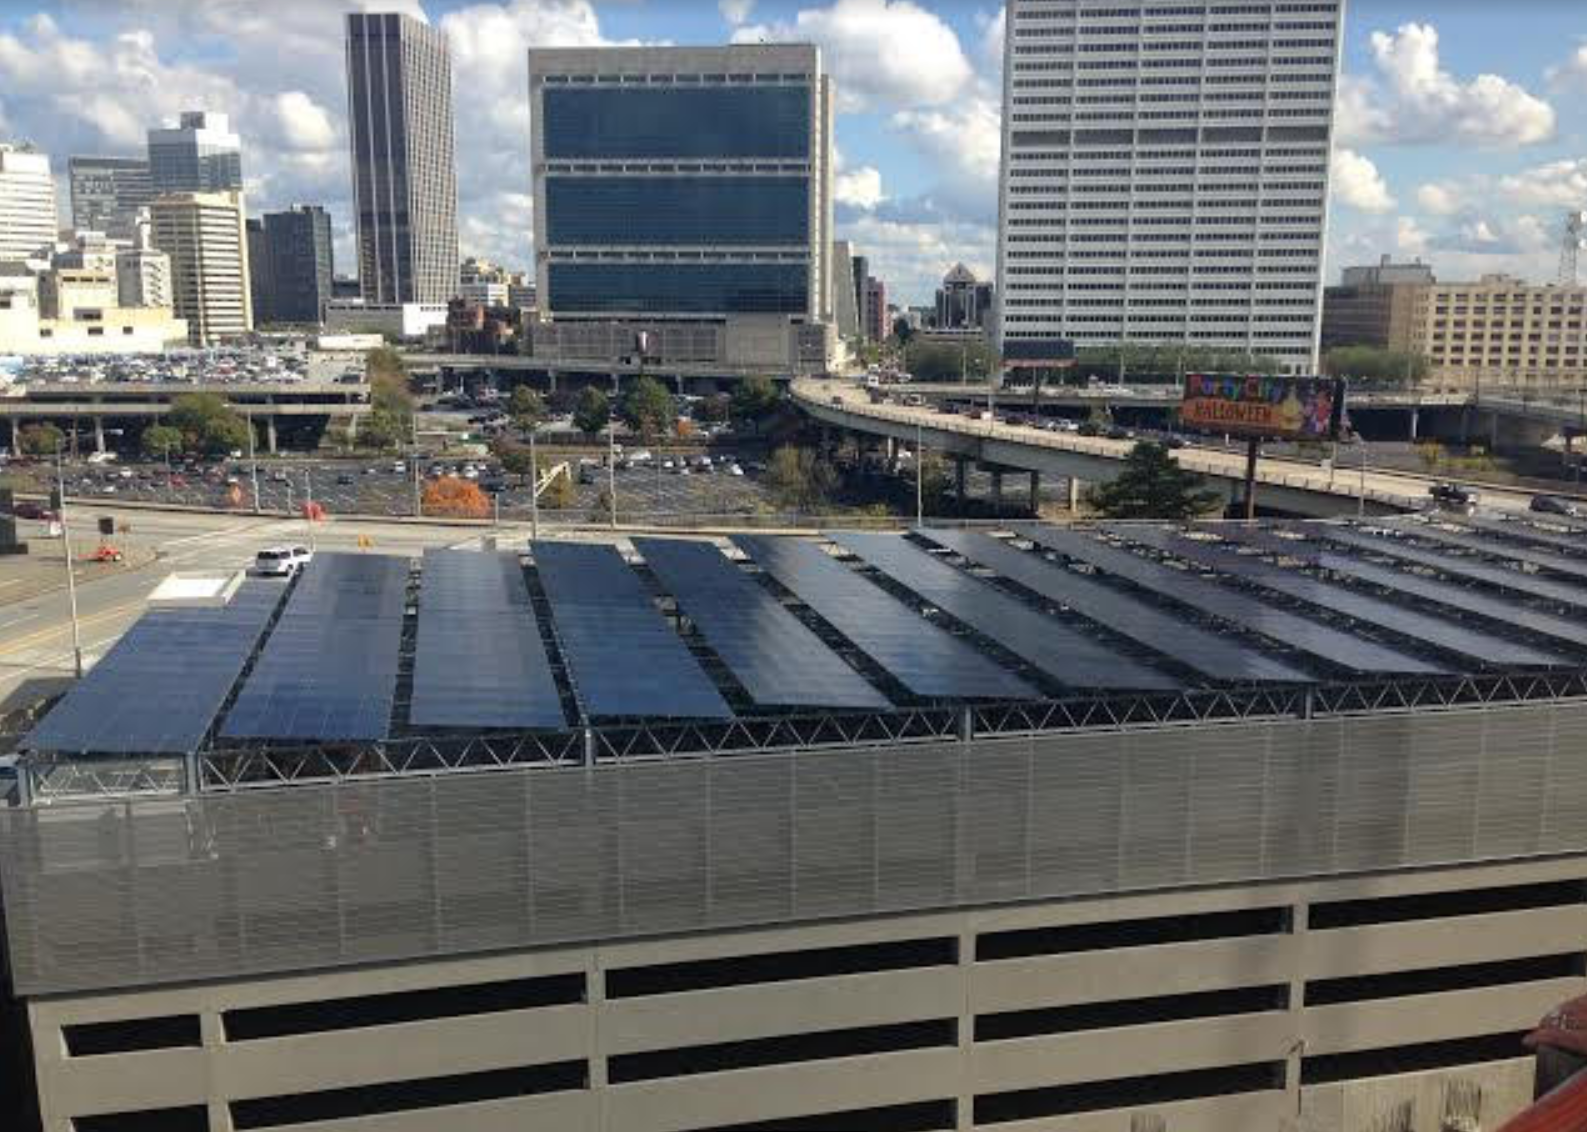 Falcon Stadium Parking Garage Solar Canopy, Atlanta Solar Project 500kW – NDA with Georgia Power